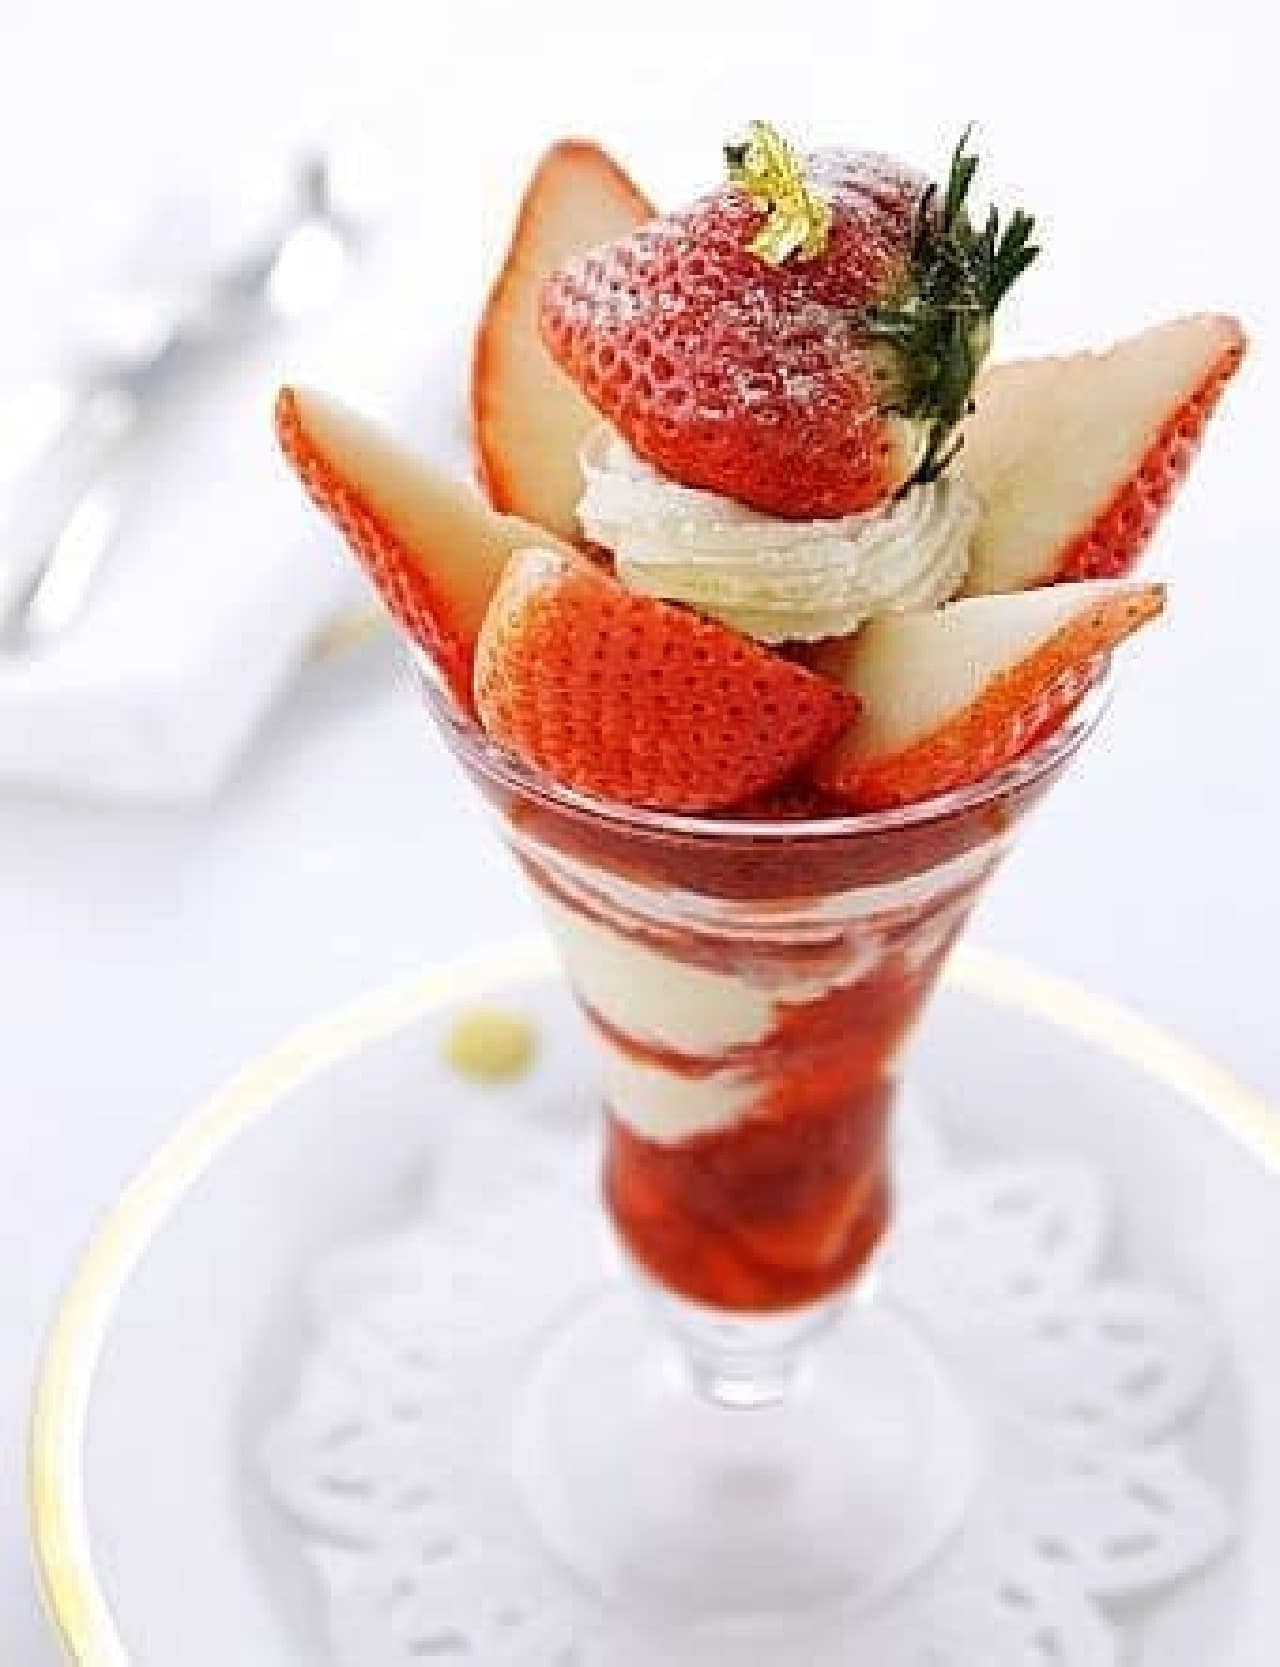 Shiseido Parlor "Mino Musume's Premium Strawberry Parfait from Gifu Prefecture"